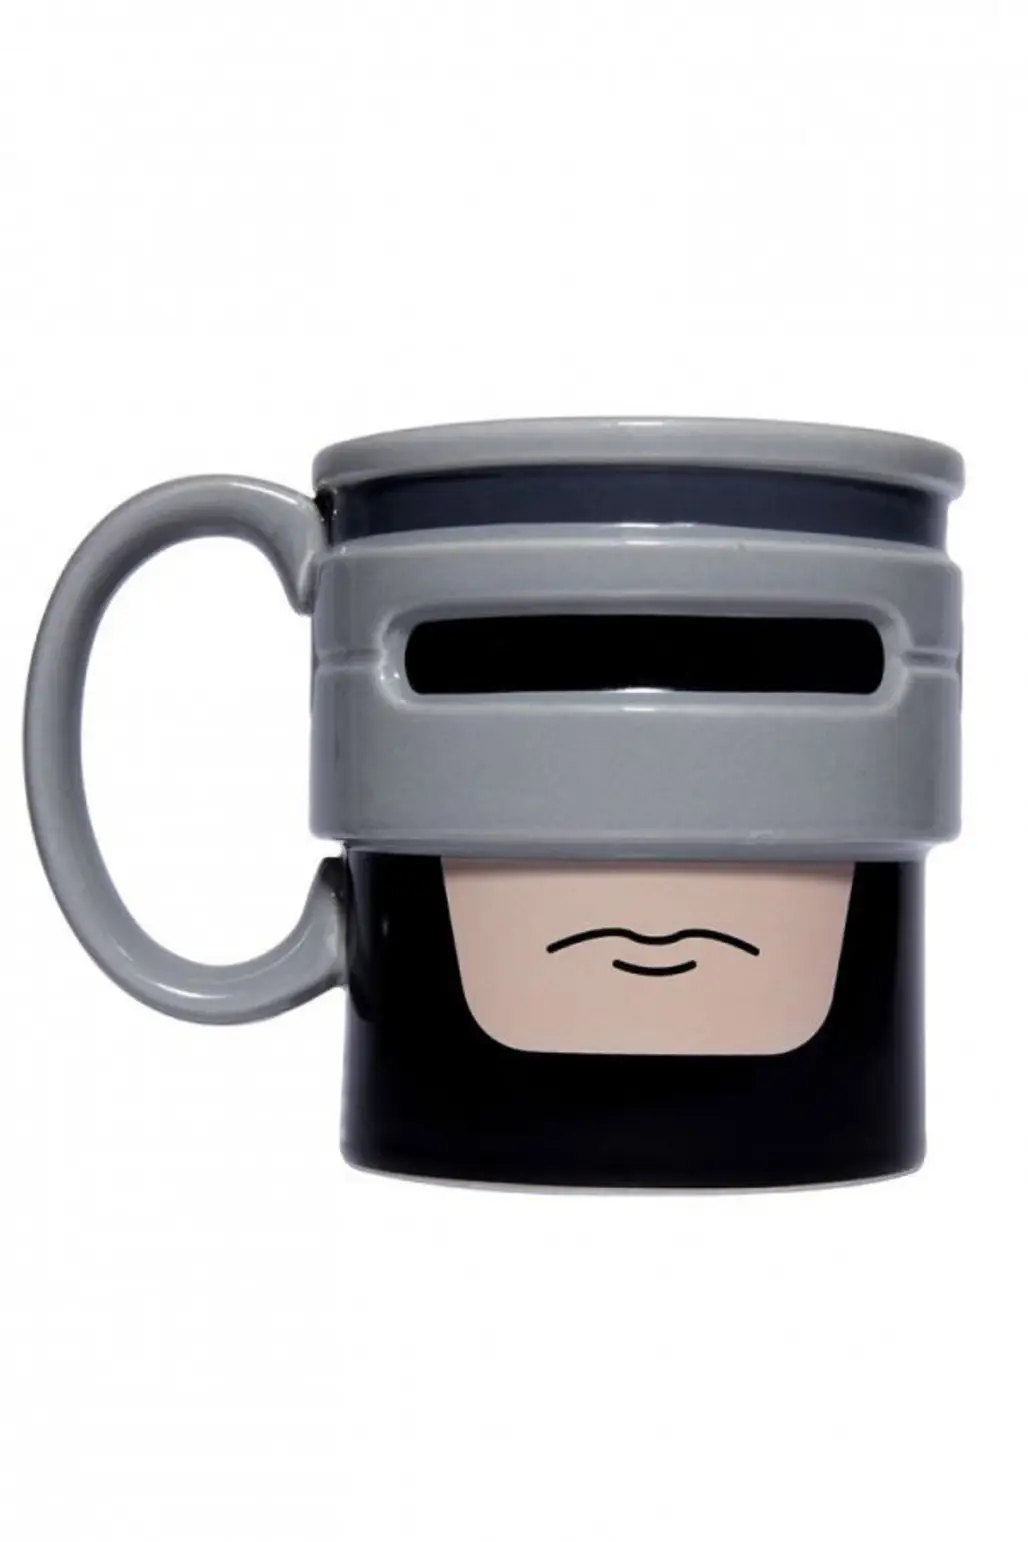 cup, mug, coffee cup, small appliance, drinkware,